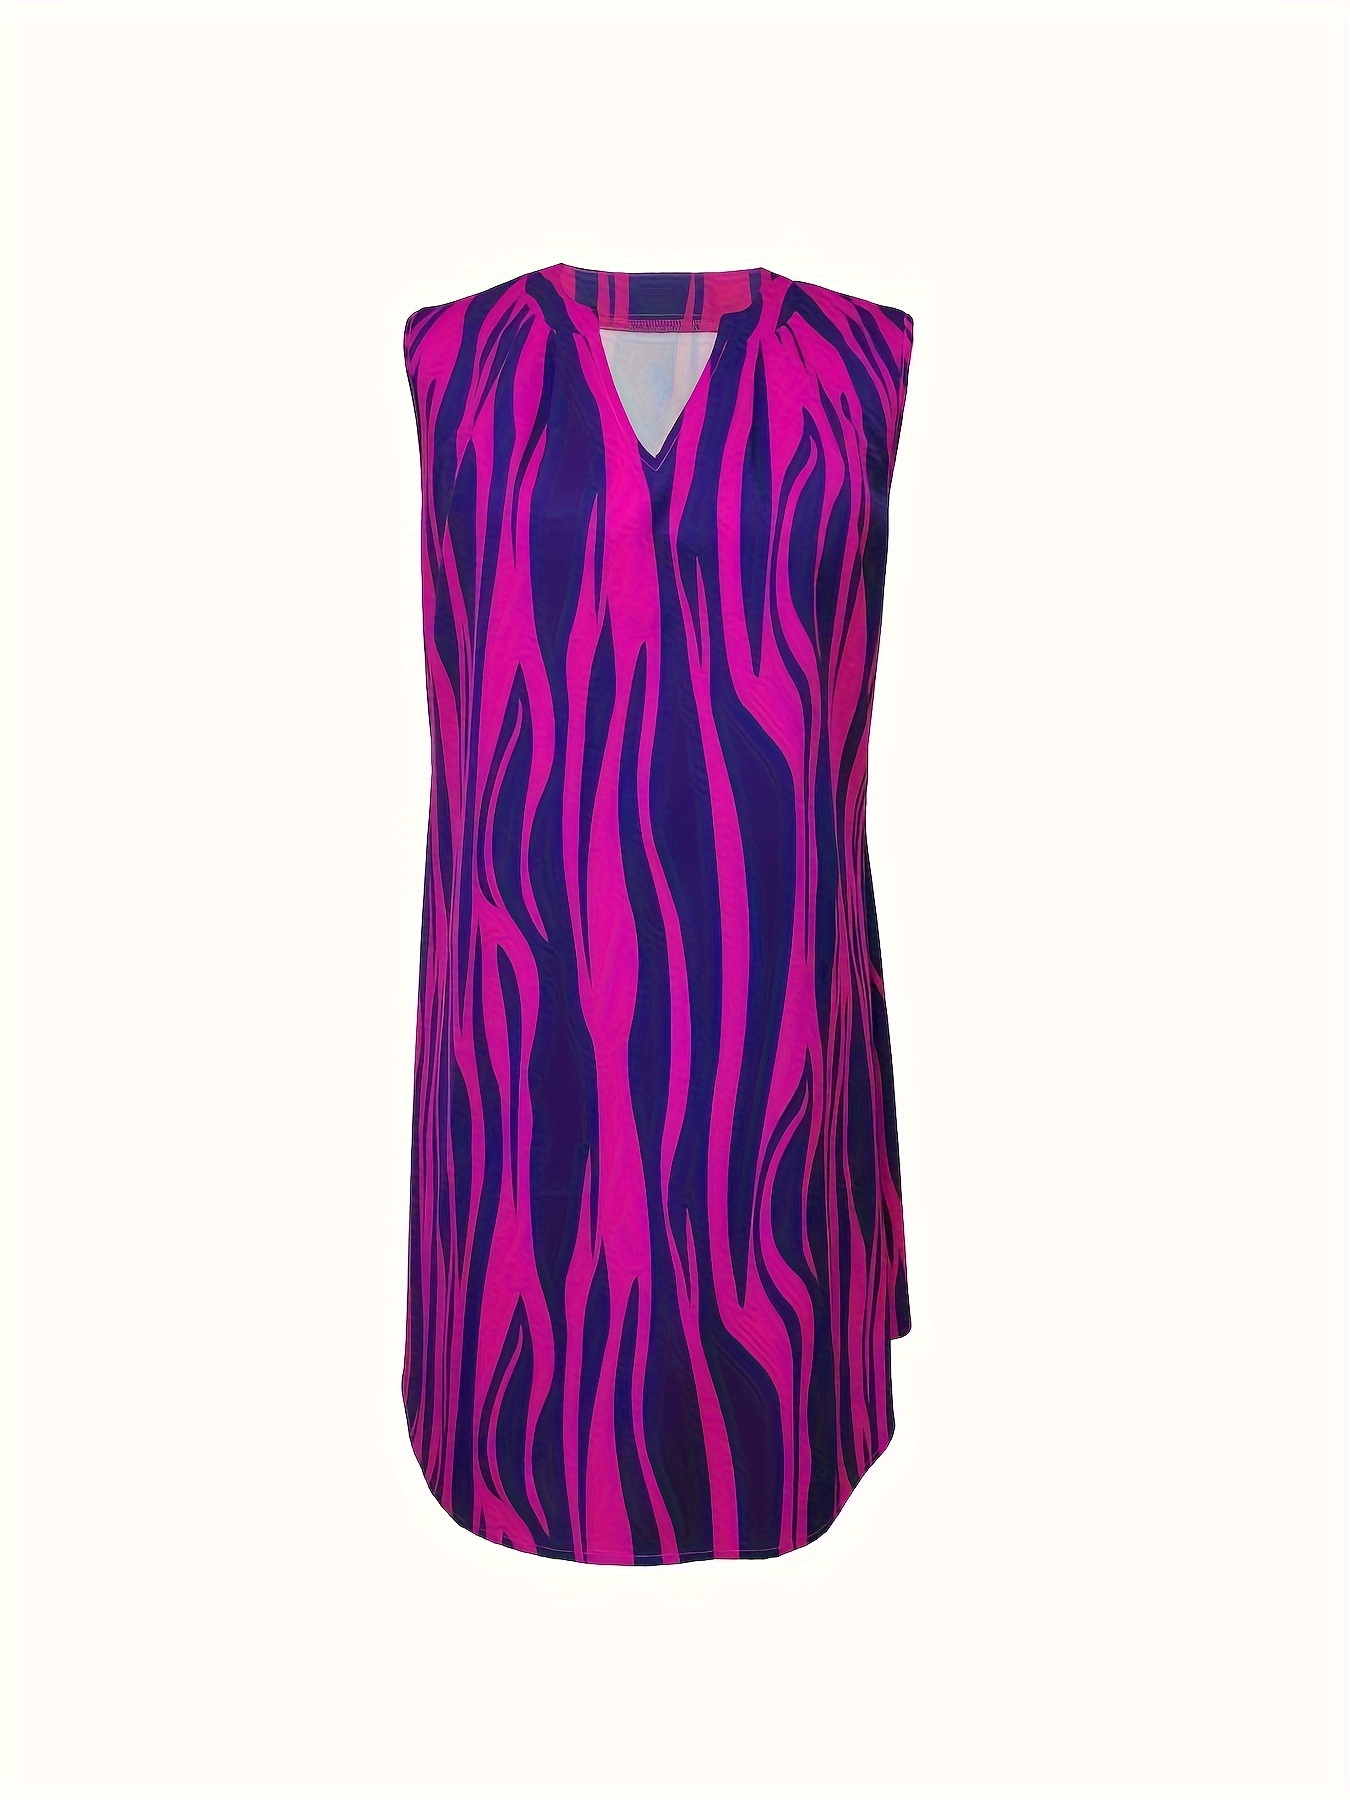 abstract ripple print dress casual v neck sleeveless dress womens clothing details 27